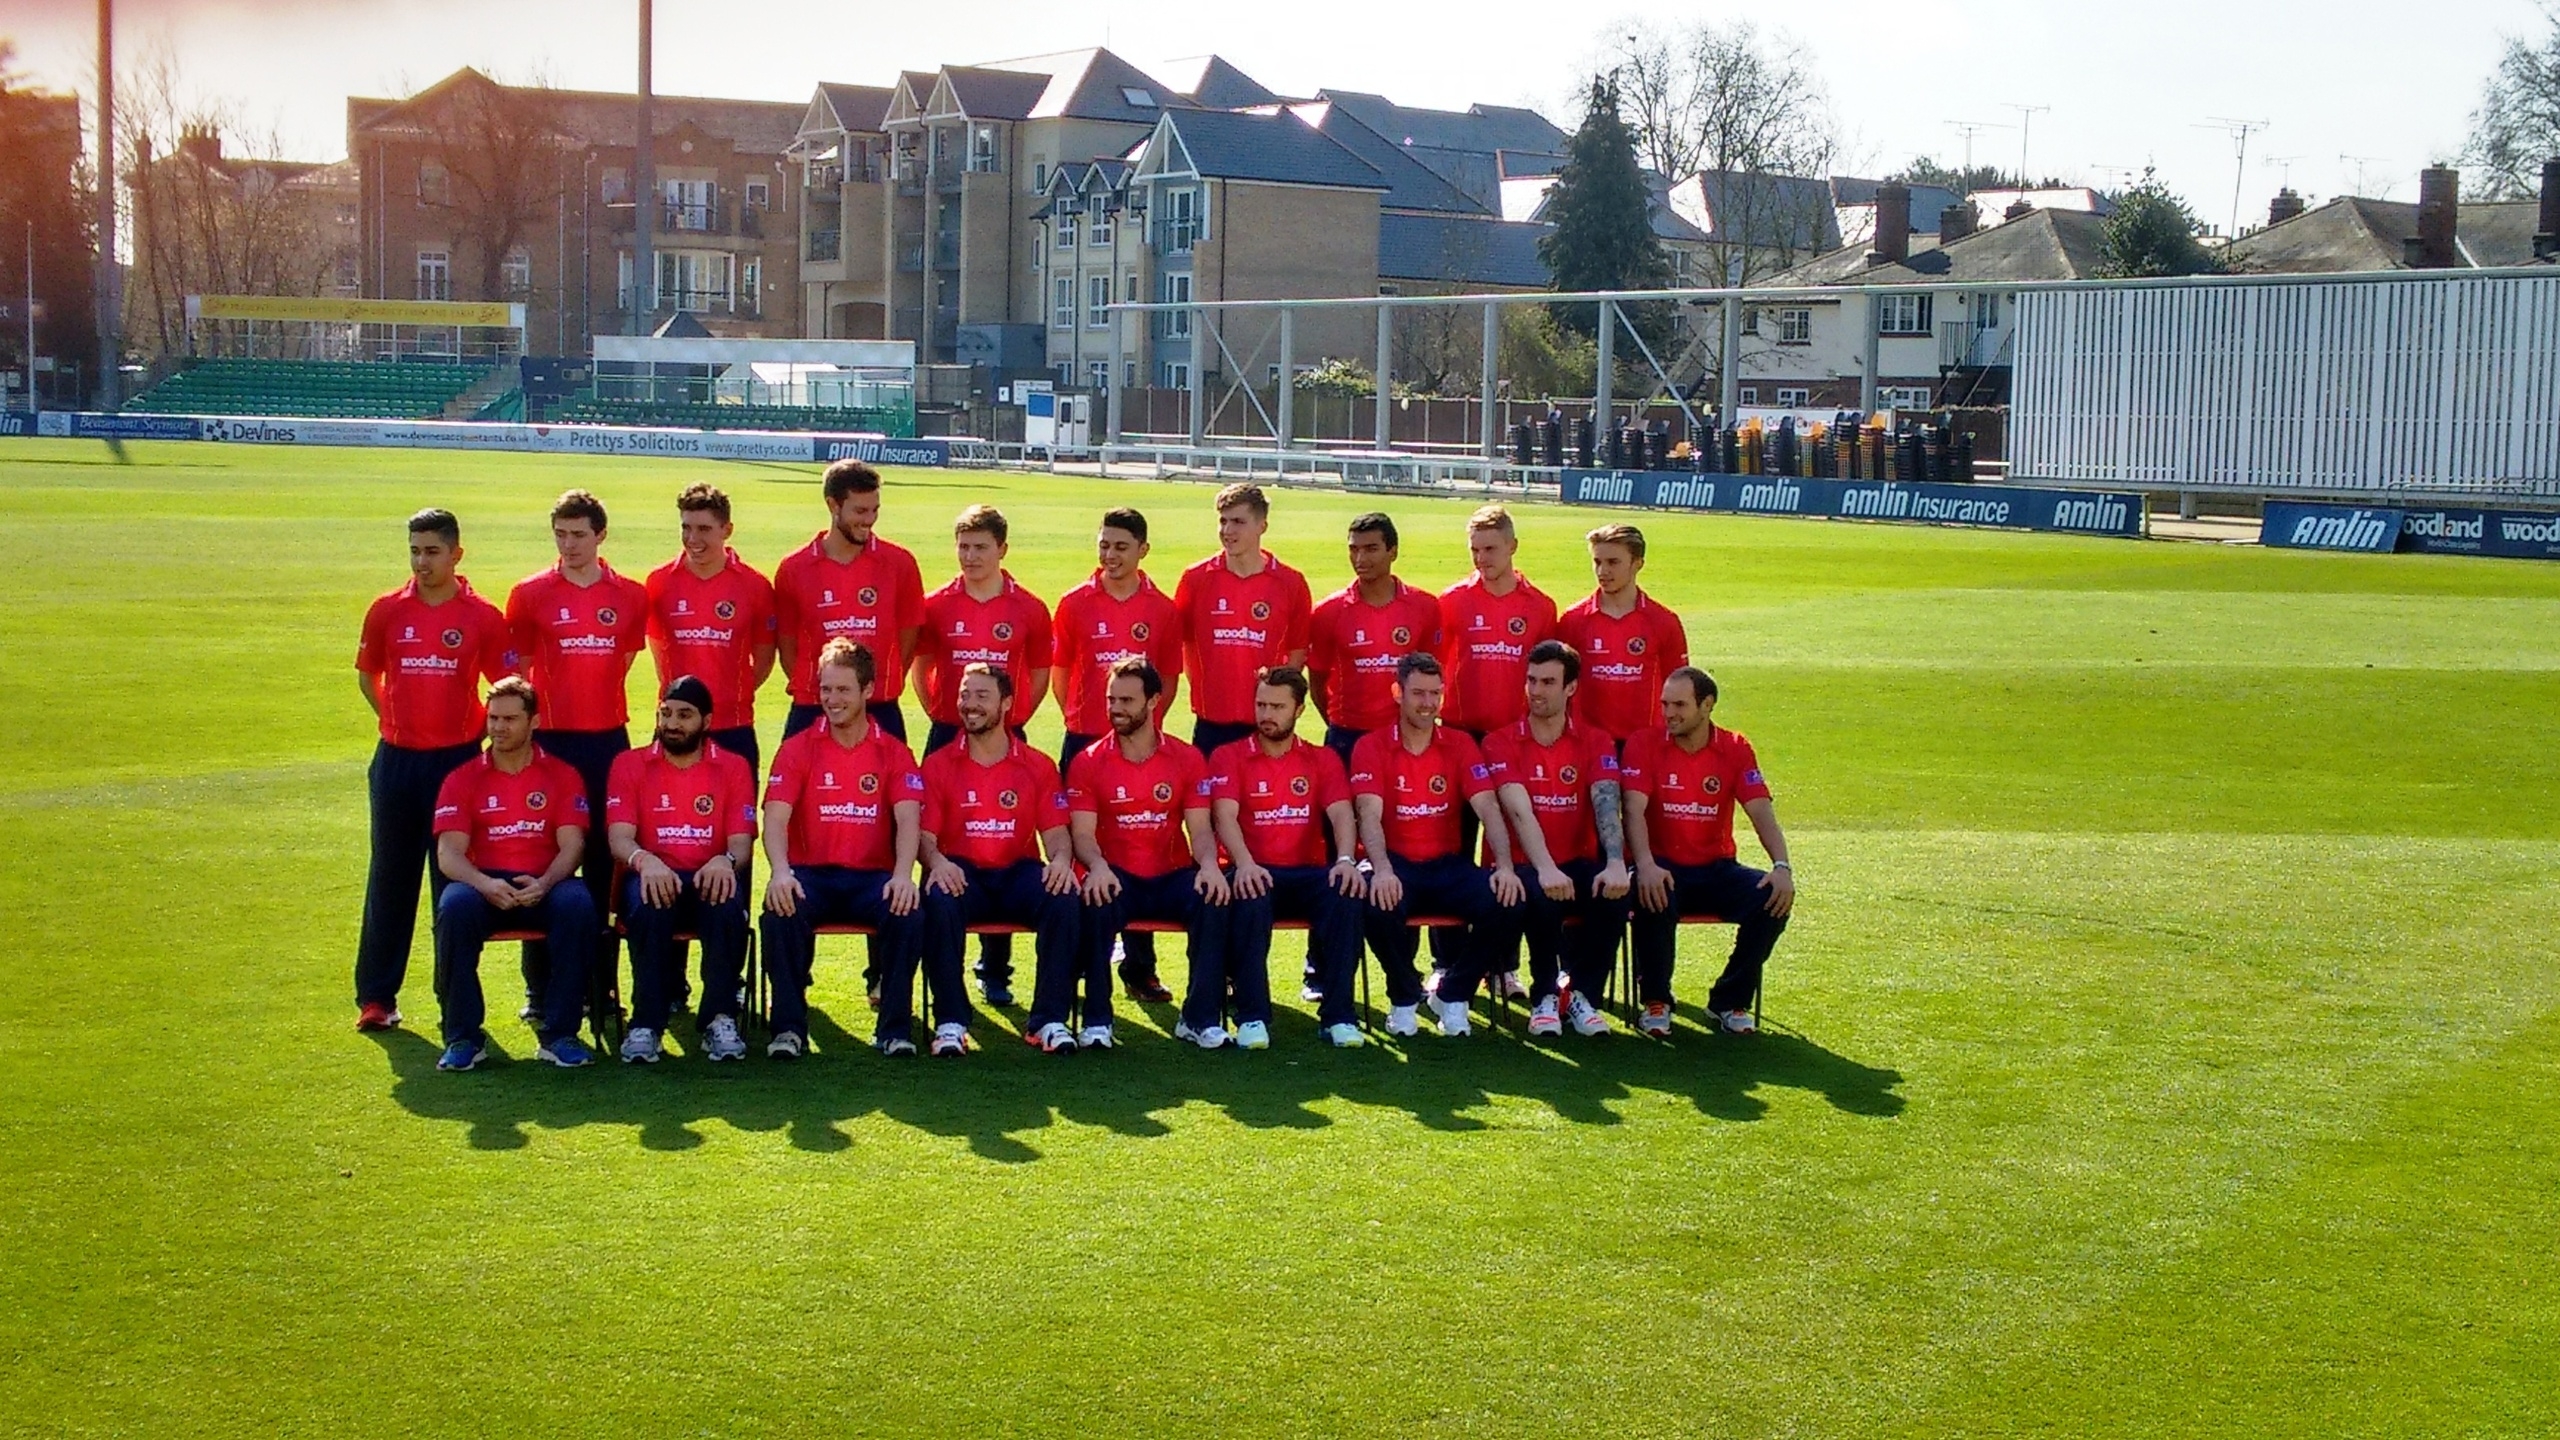 Essex Cricket Squad for 2560x1440 HDTV resolution